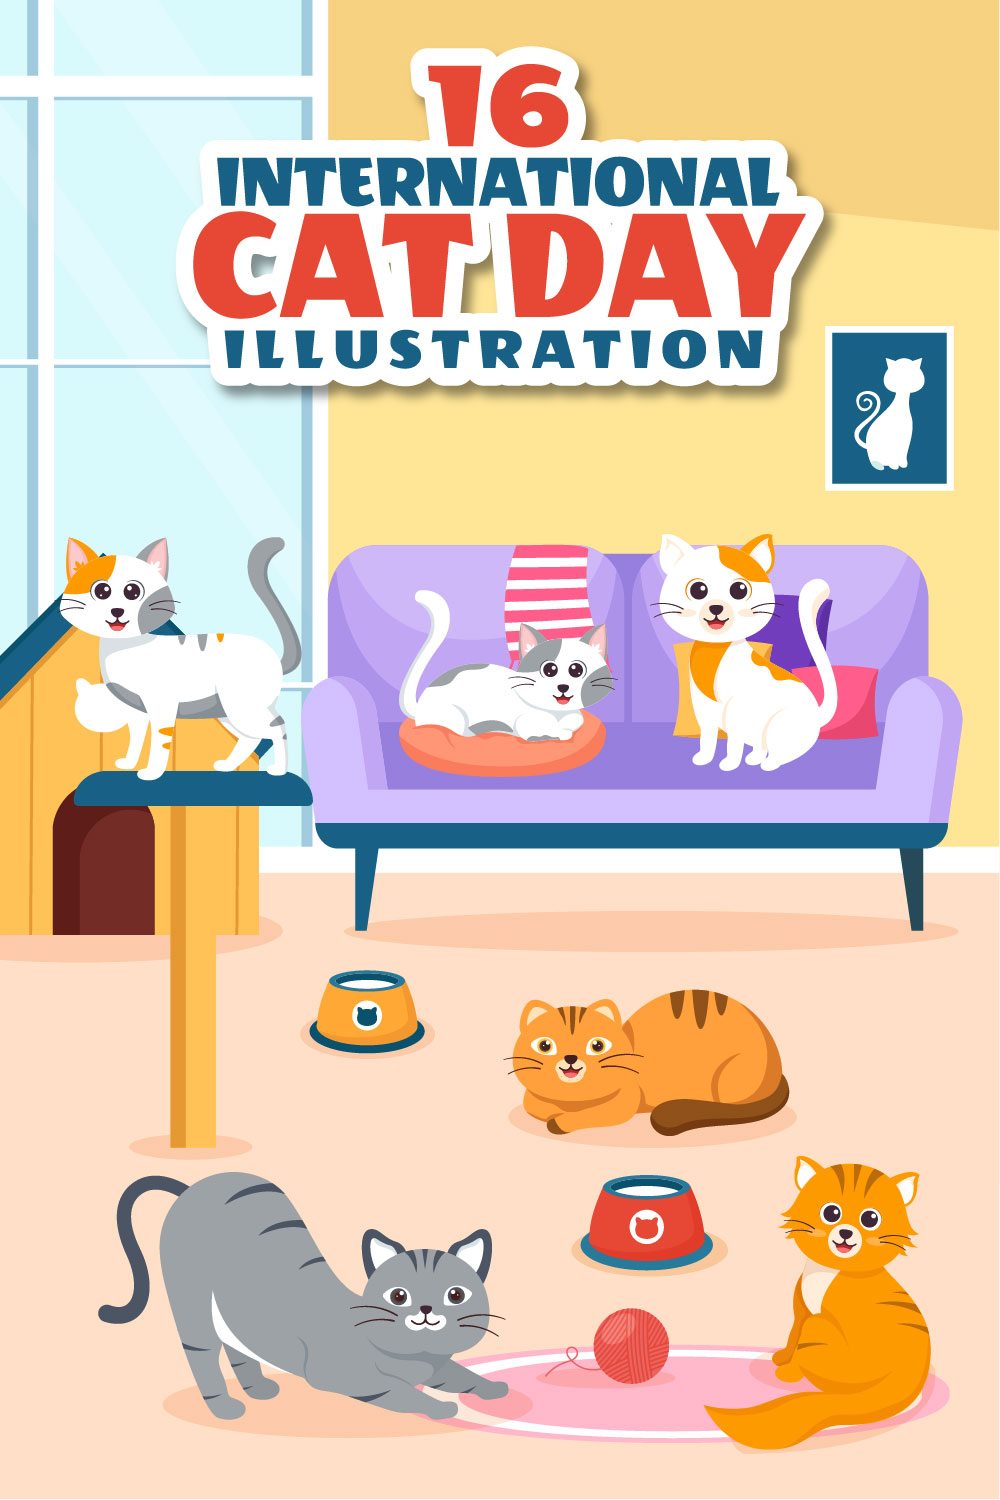 16 International Cat Day Illustration pinterest preview image.